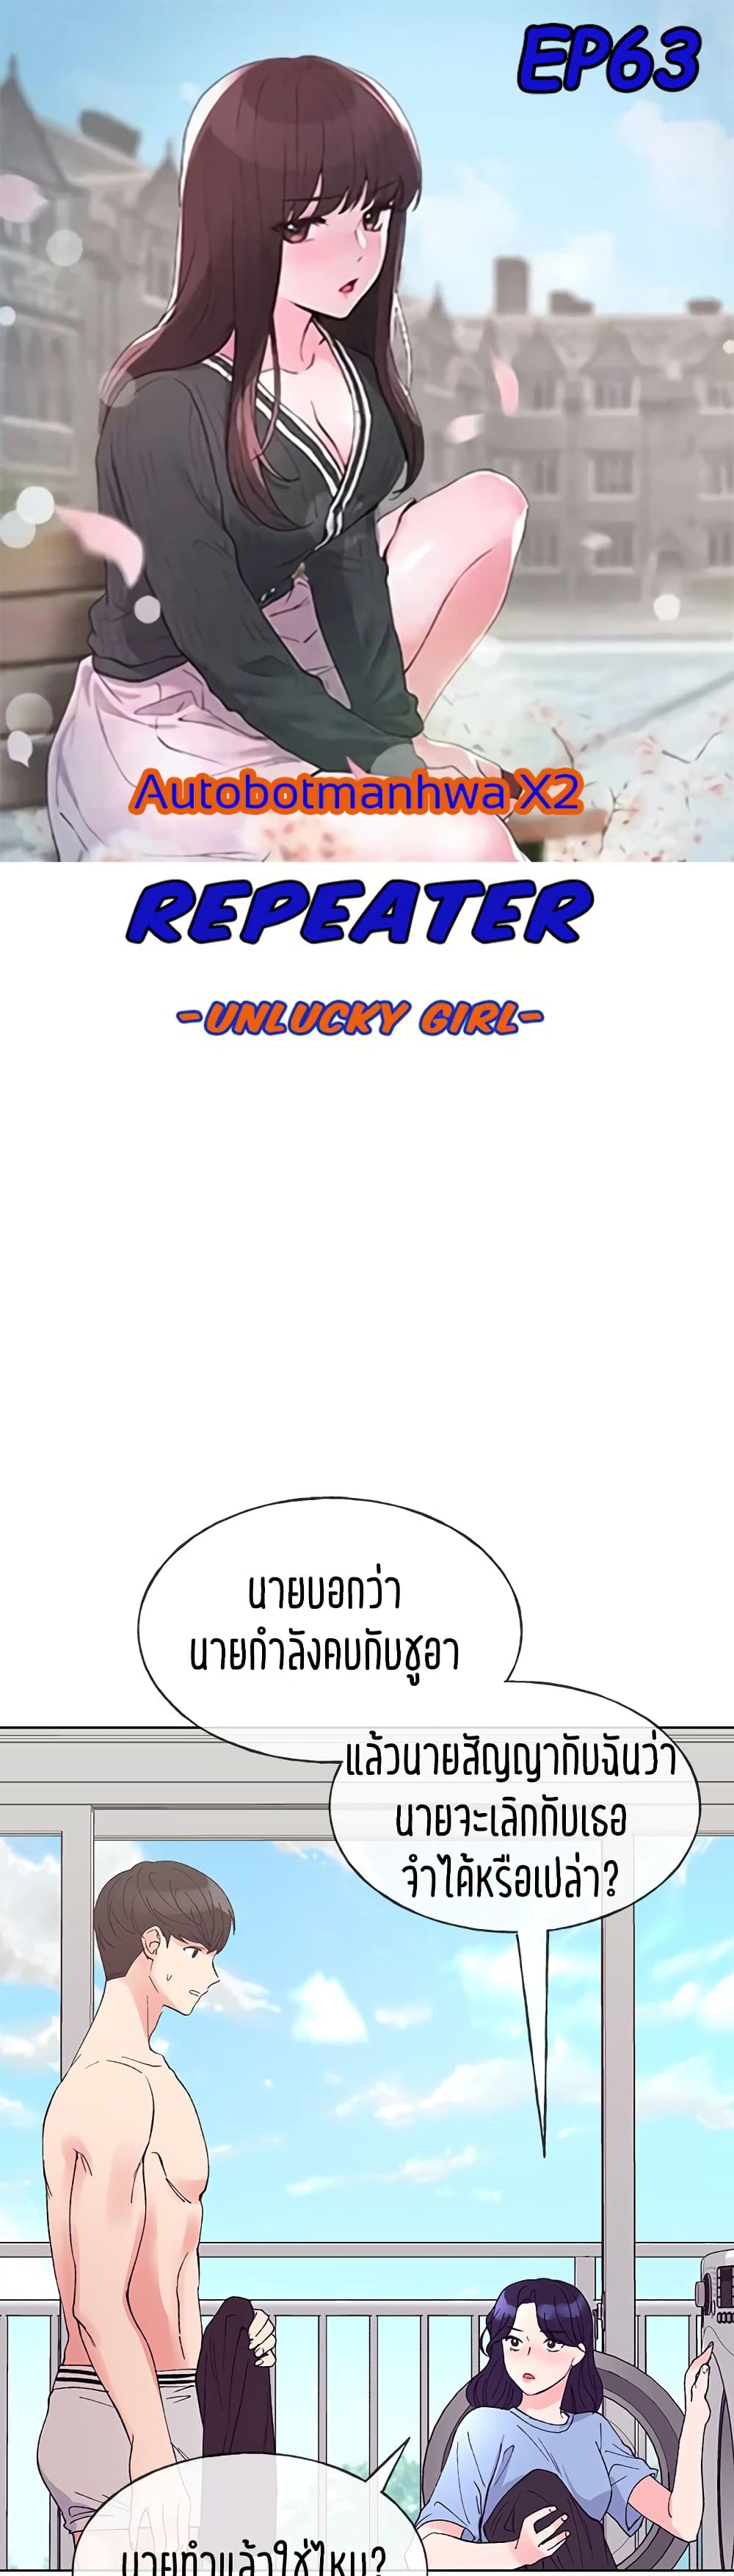 Repeater 63 (1)